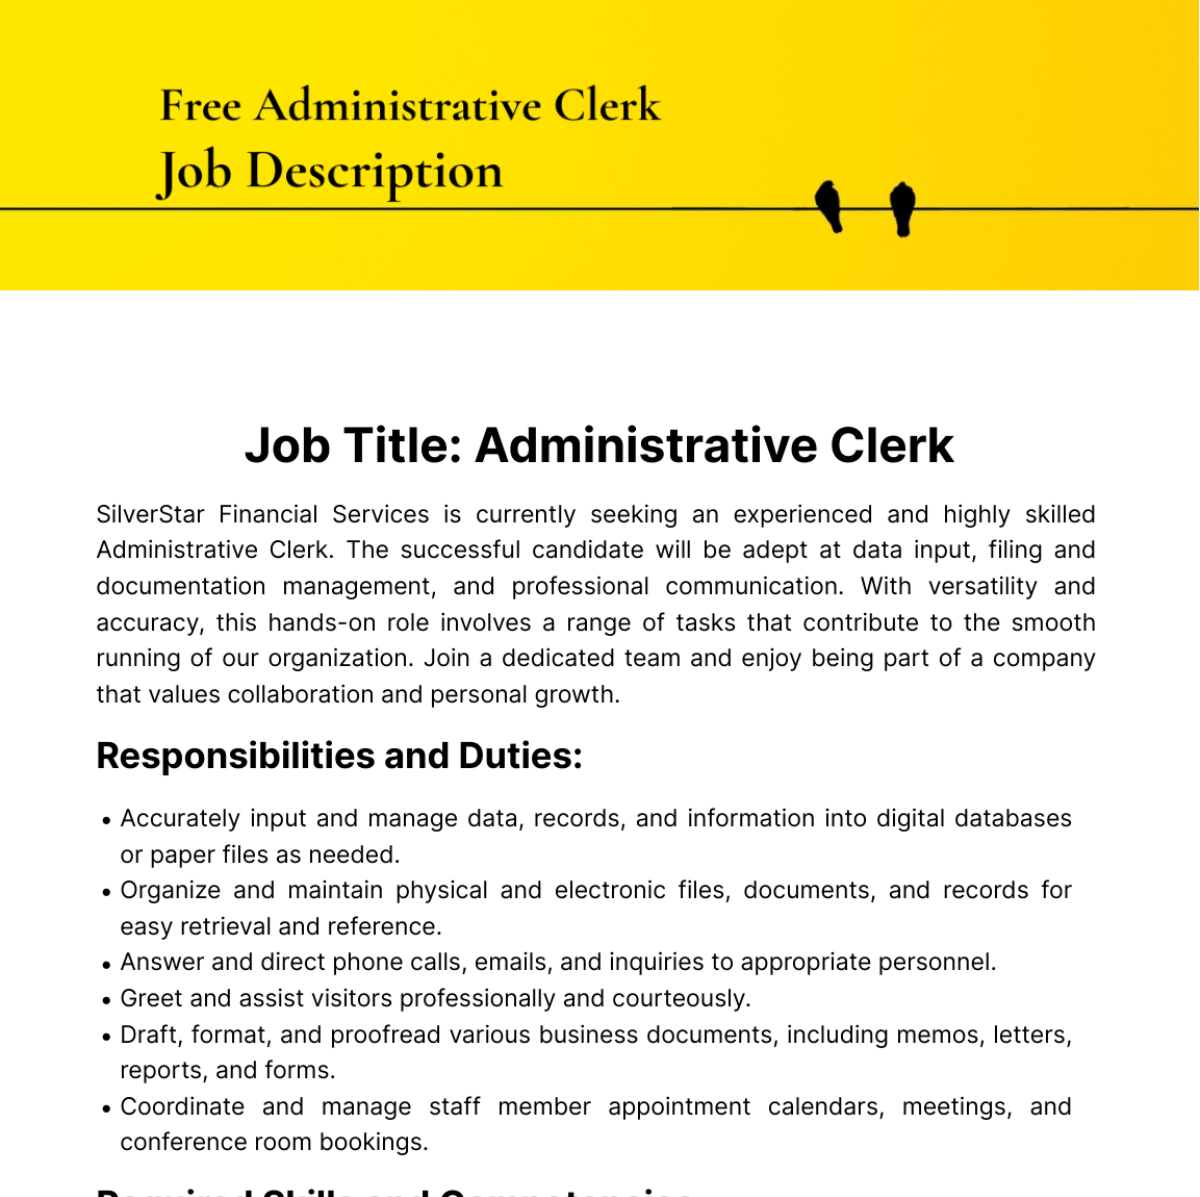 Free Administrative Clerk Job Description Template